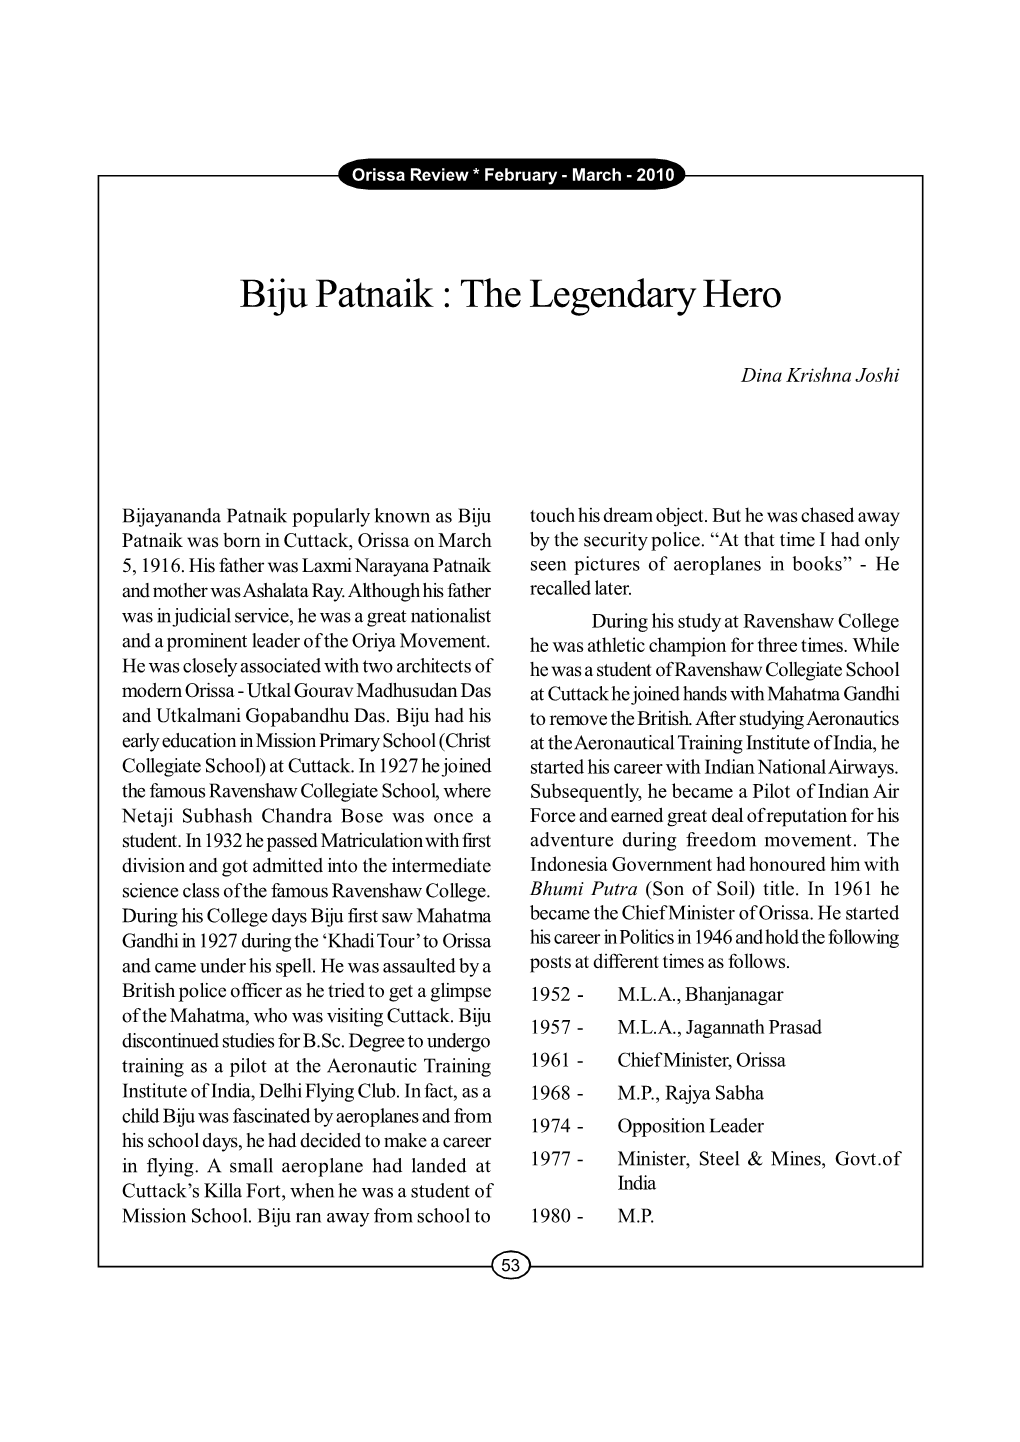 Biju Patnaik : the Legendary Hero